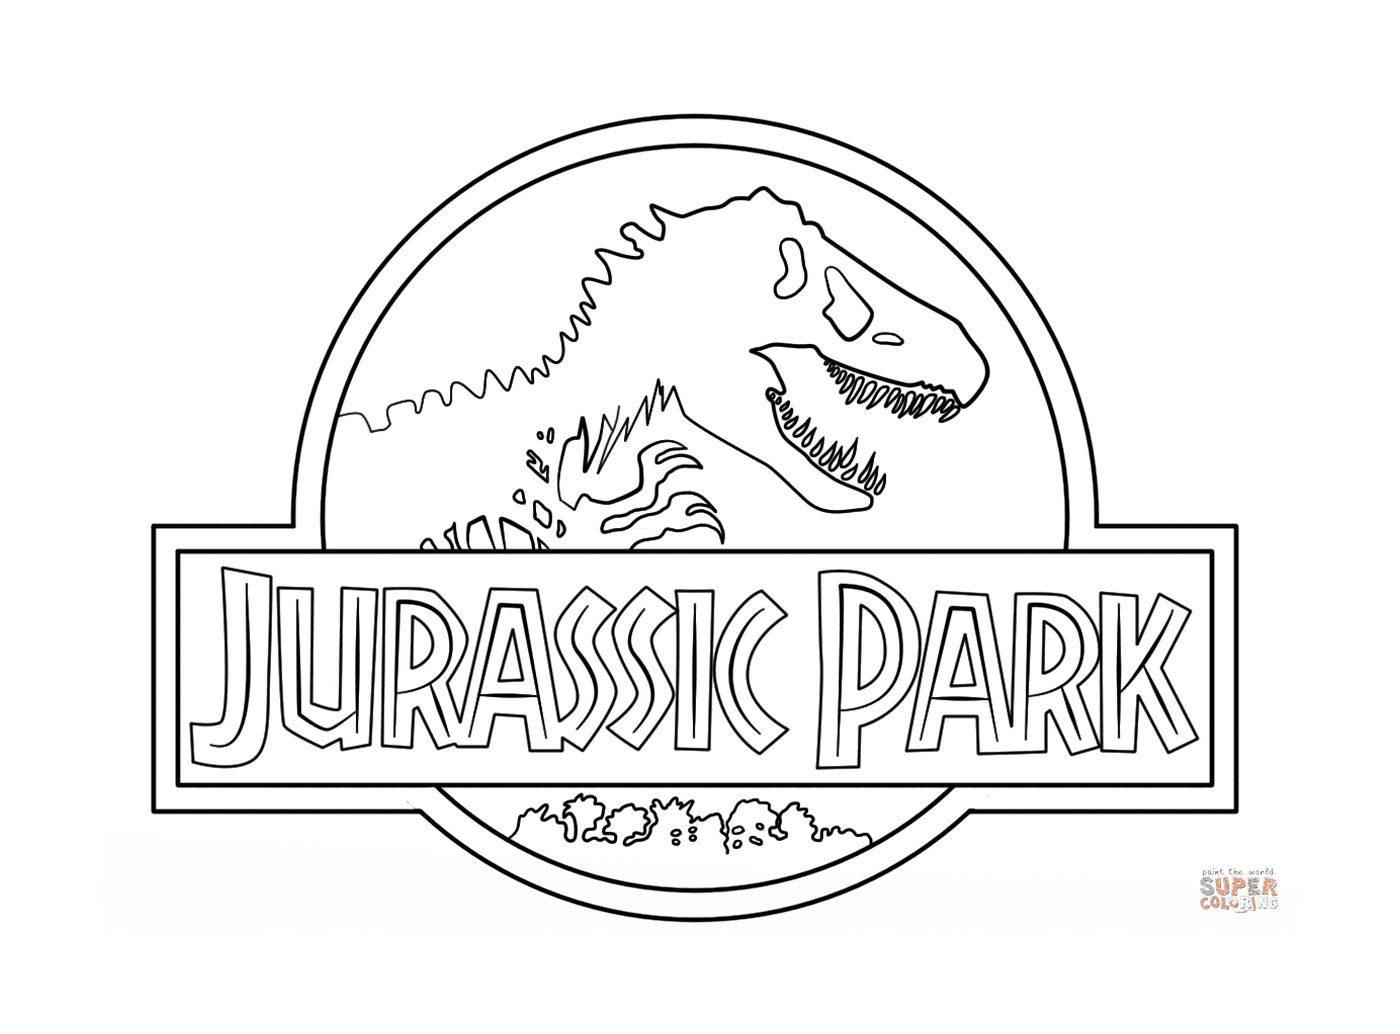  Logo Jurassic Park, l'ambiente soprattutto 